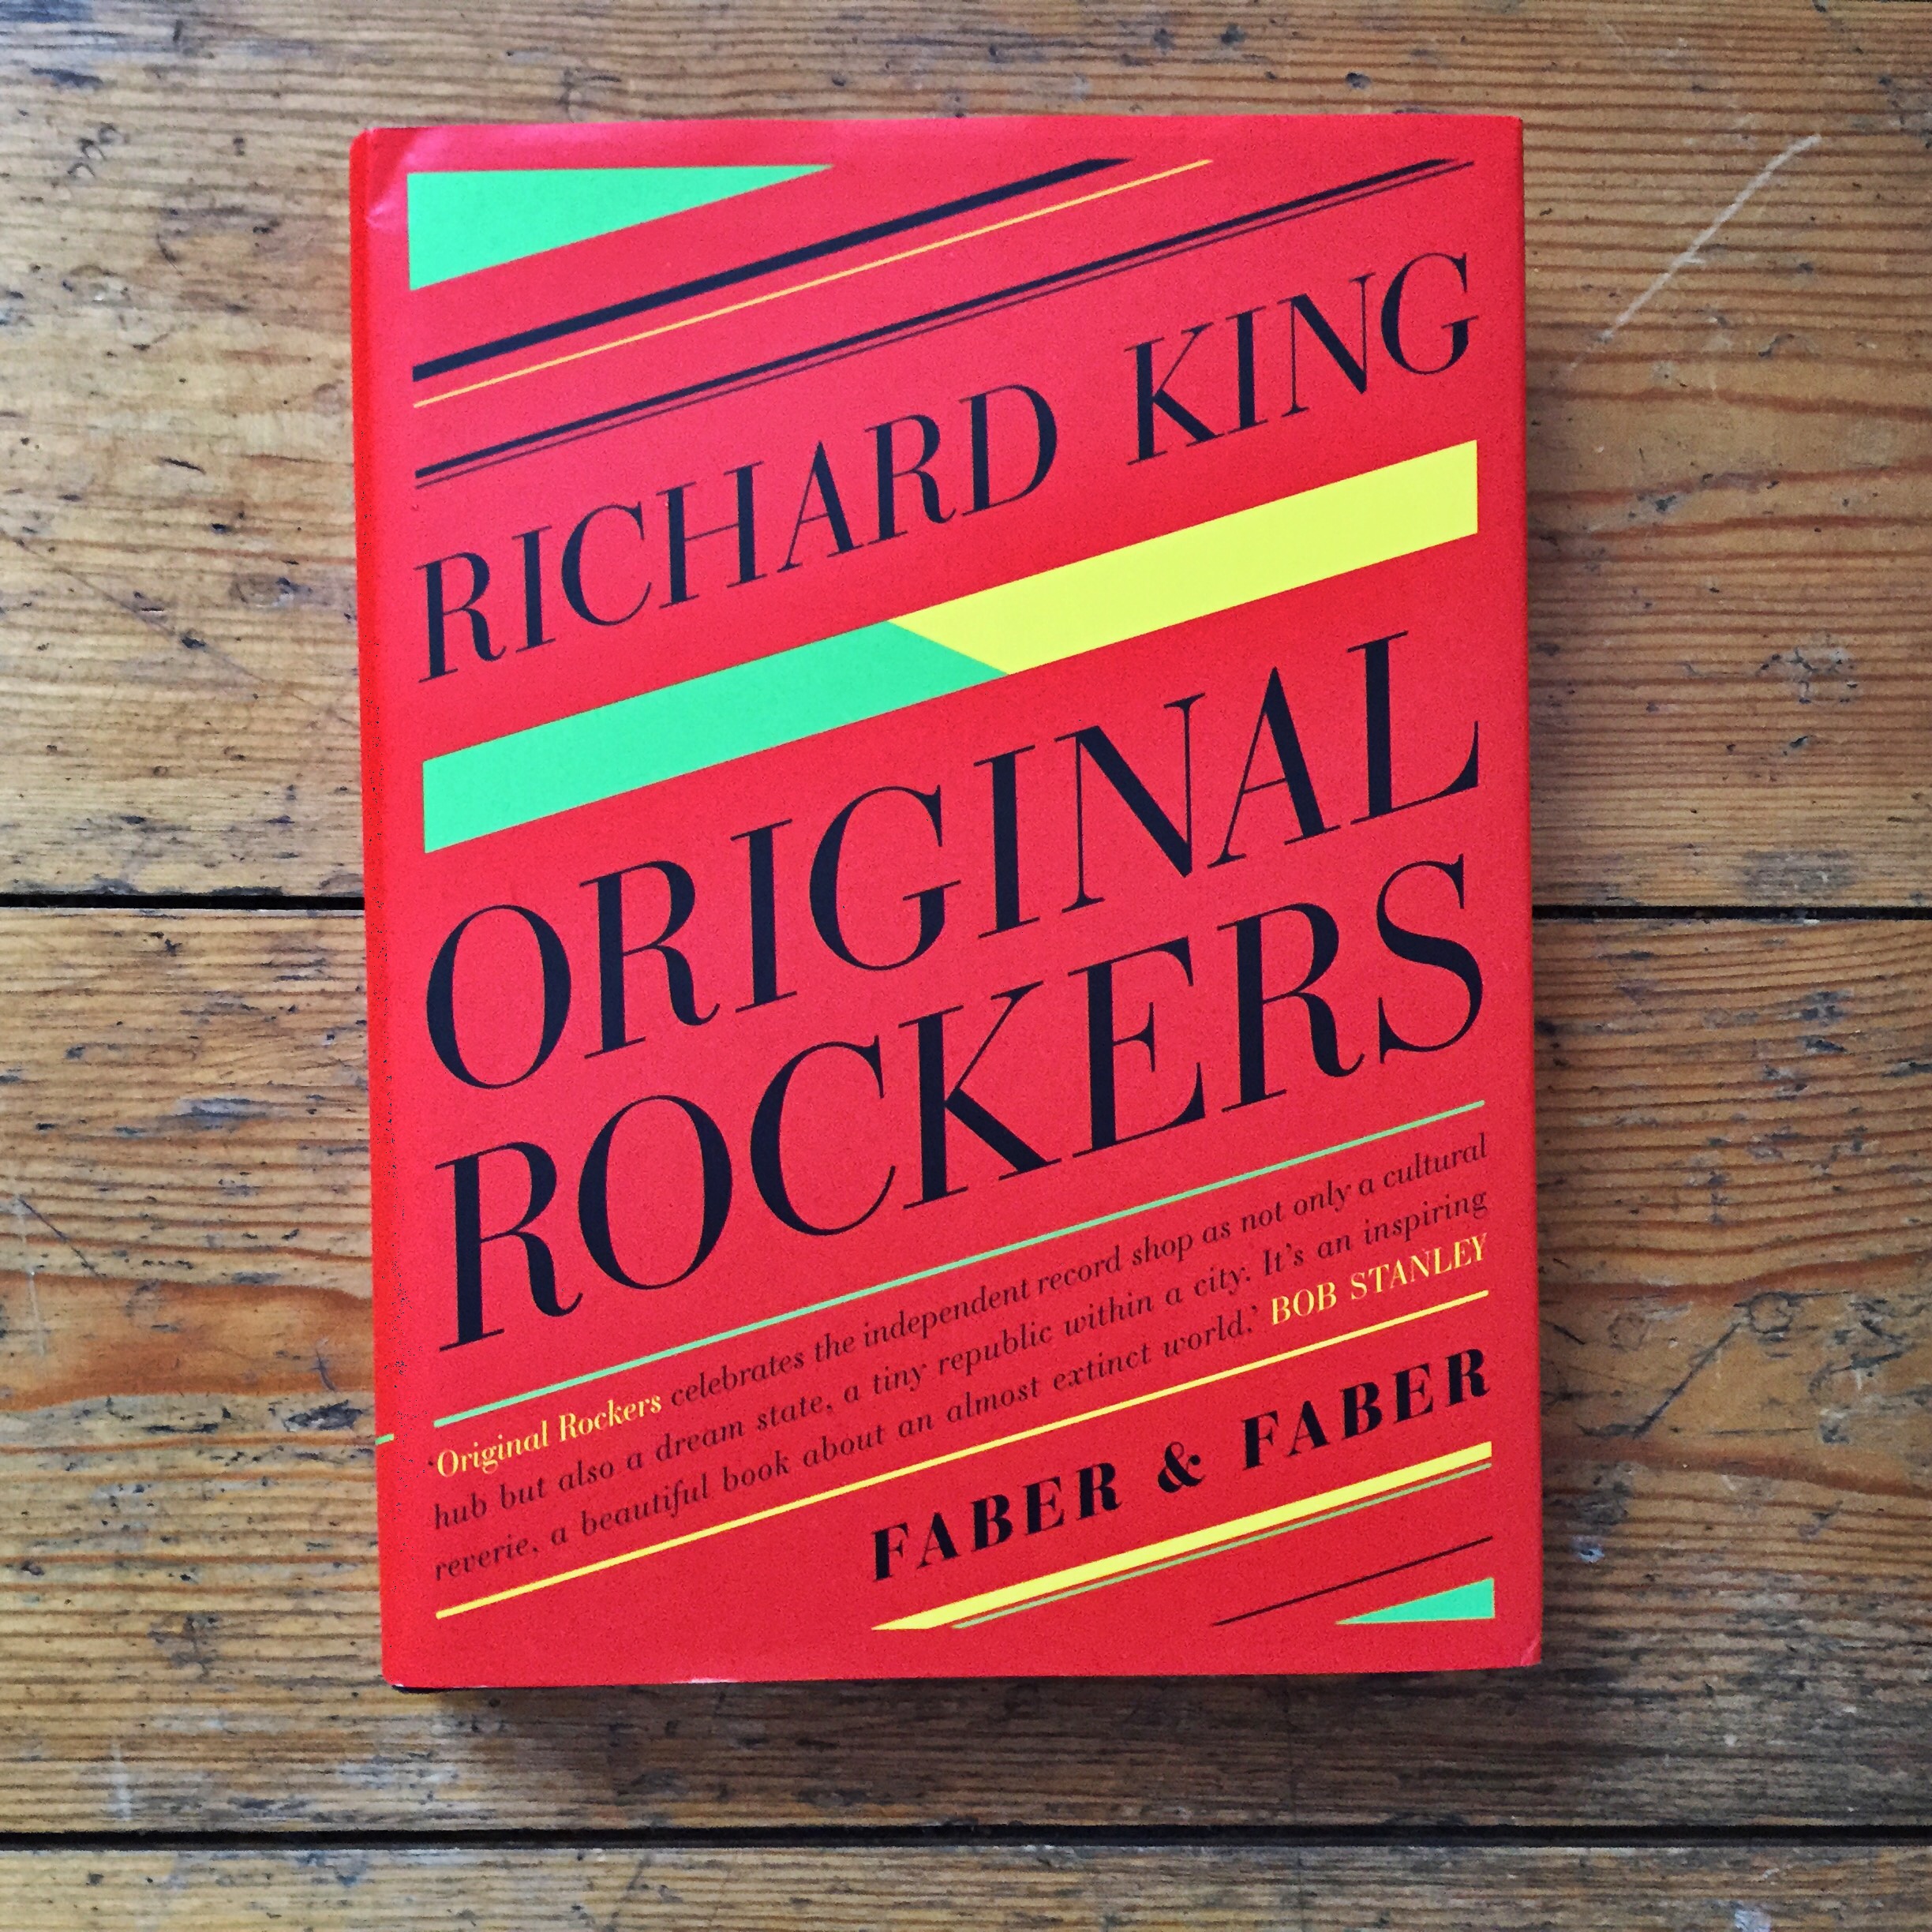 Richard King, Faber & Faber, Original Rockers, Review, Emma Warren, Test Pressing